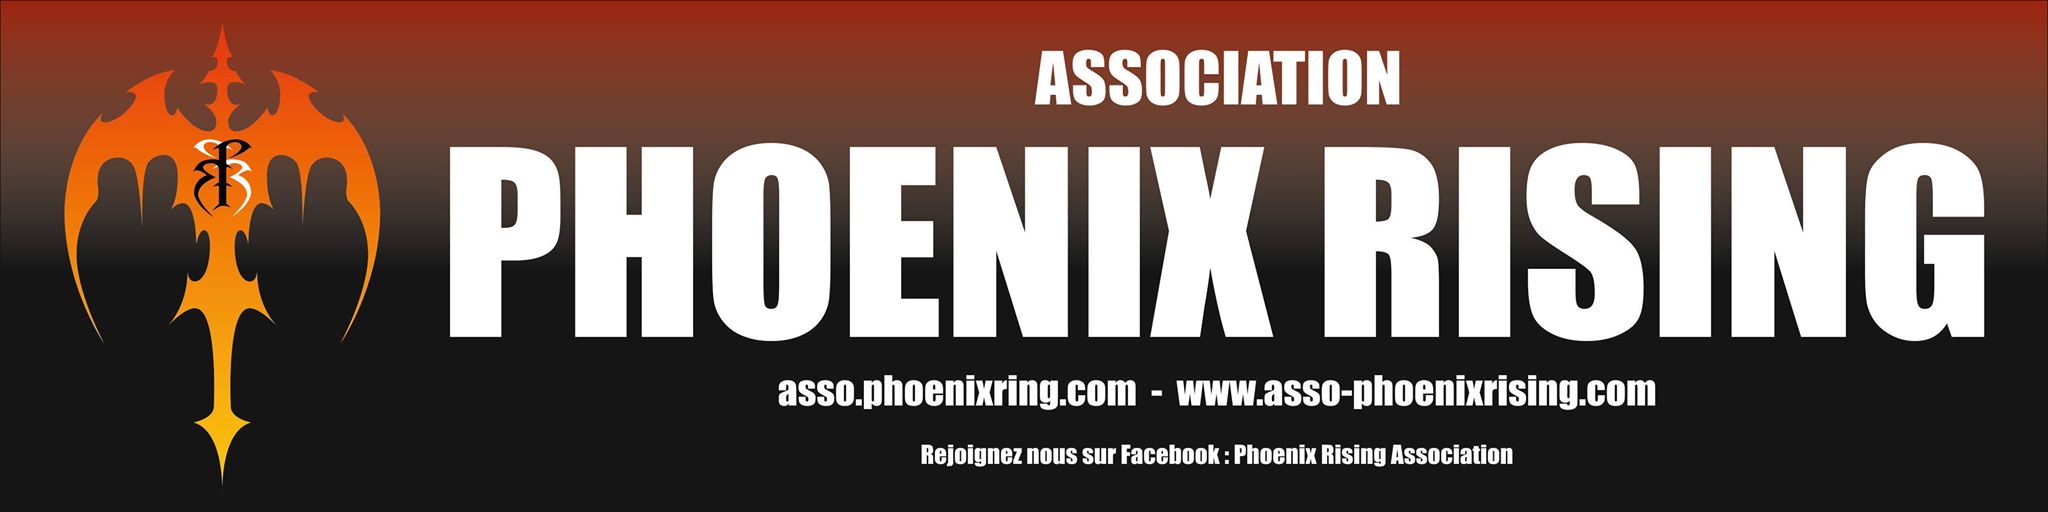 Phoenix Rising Association